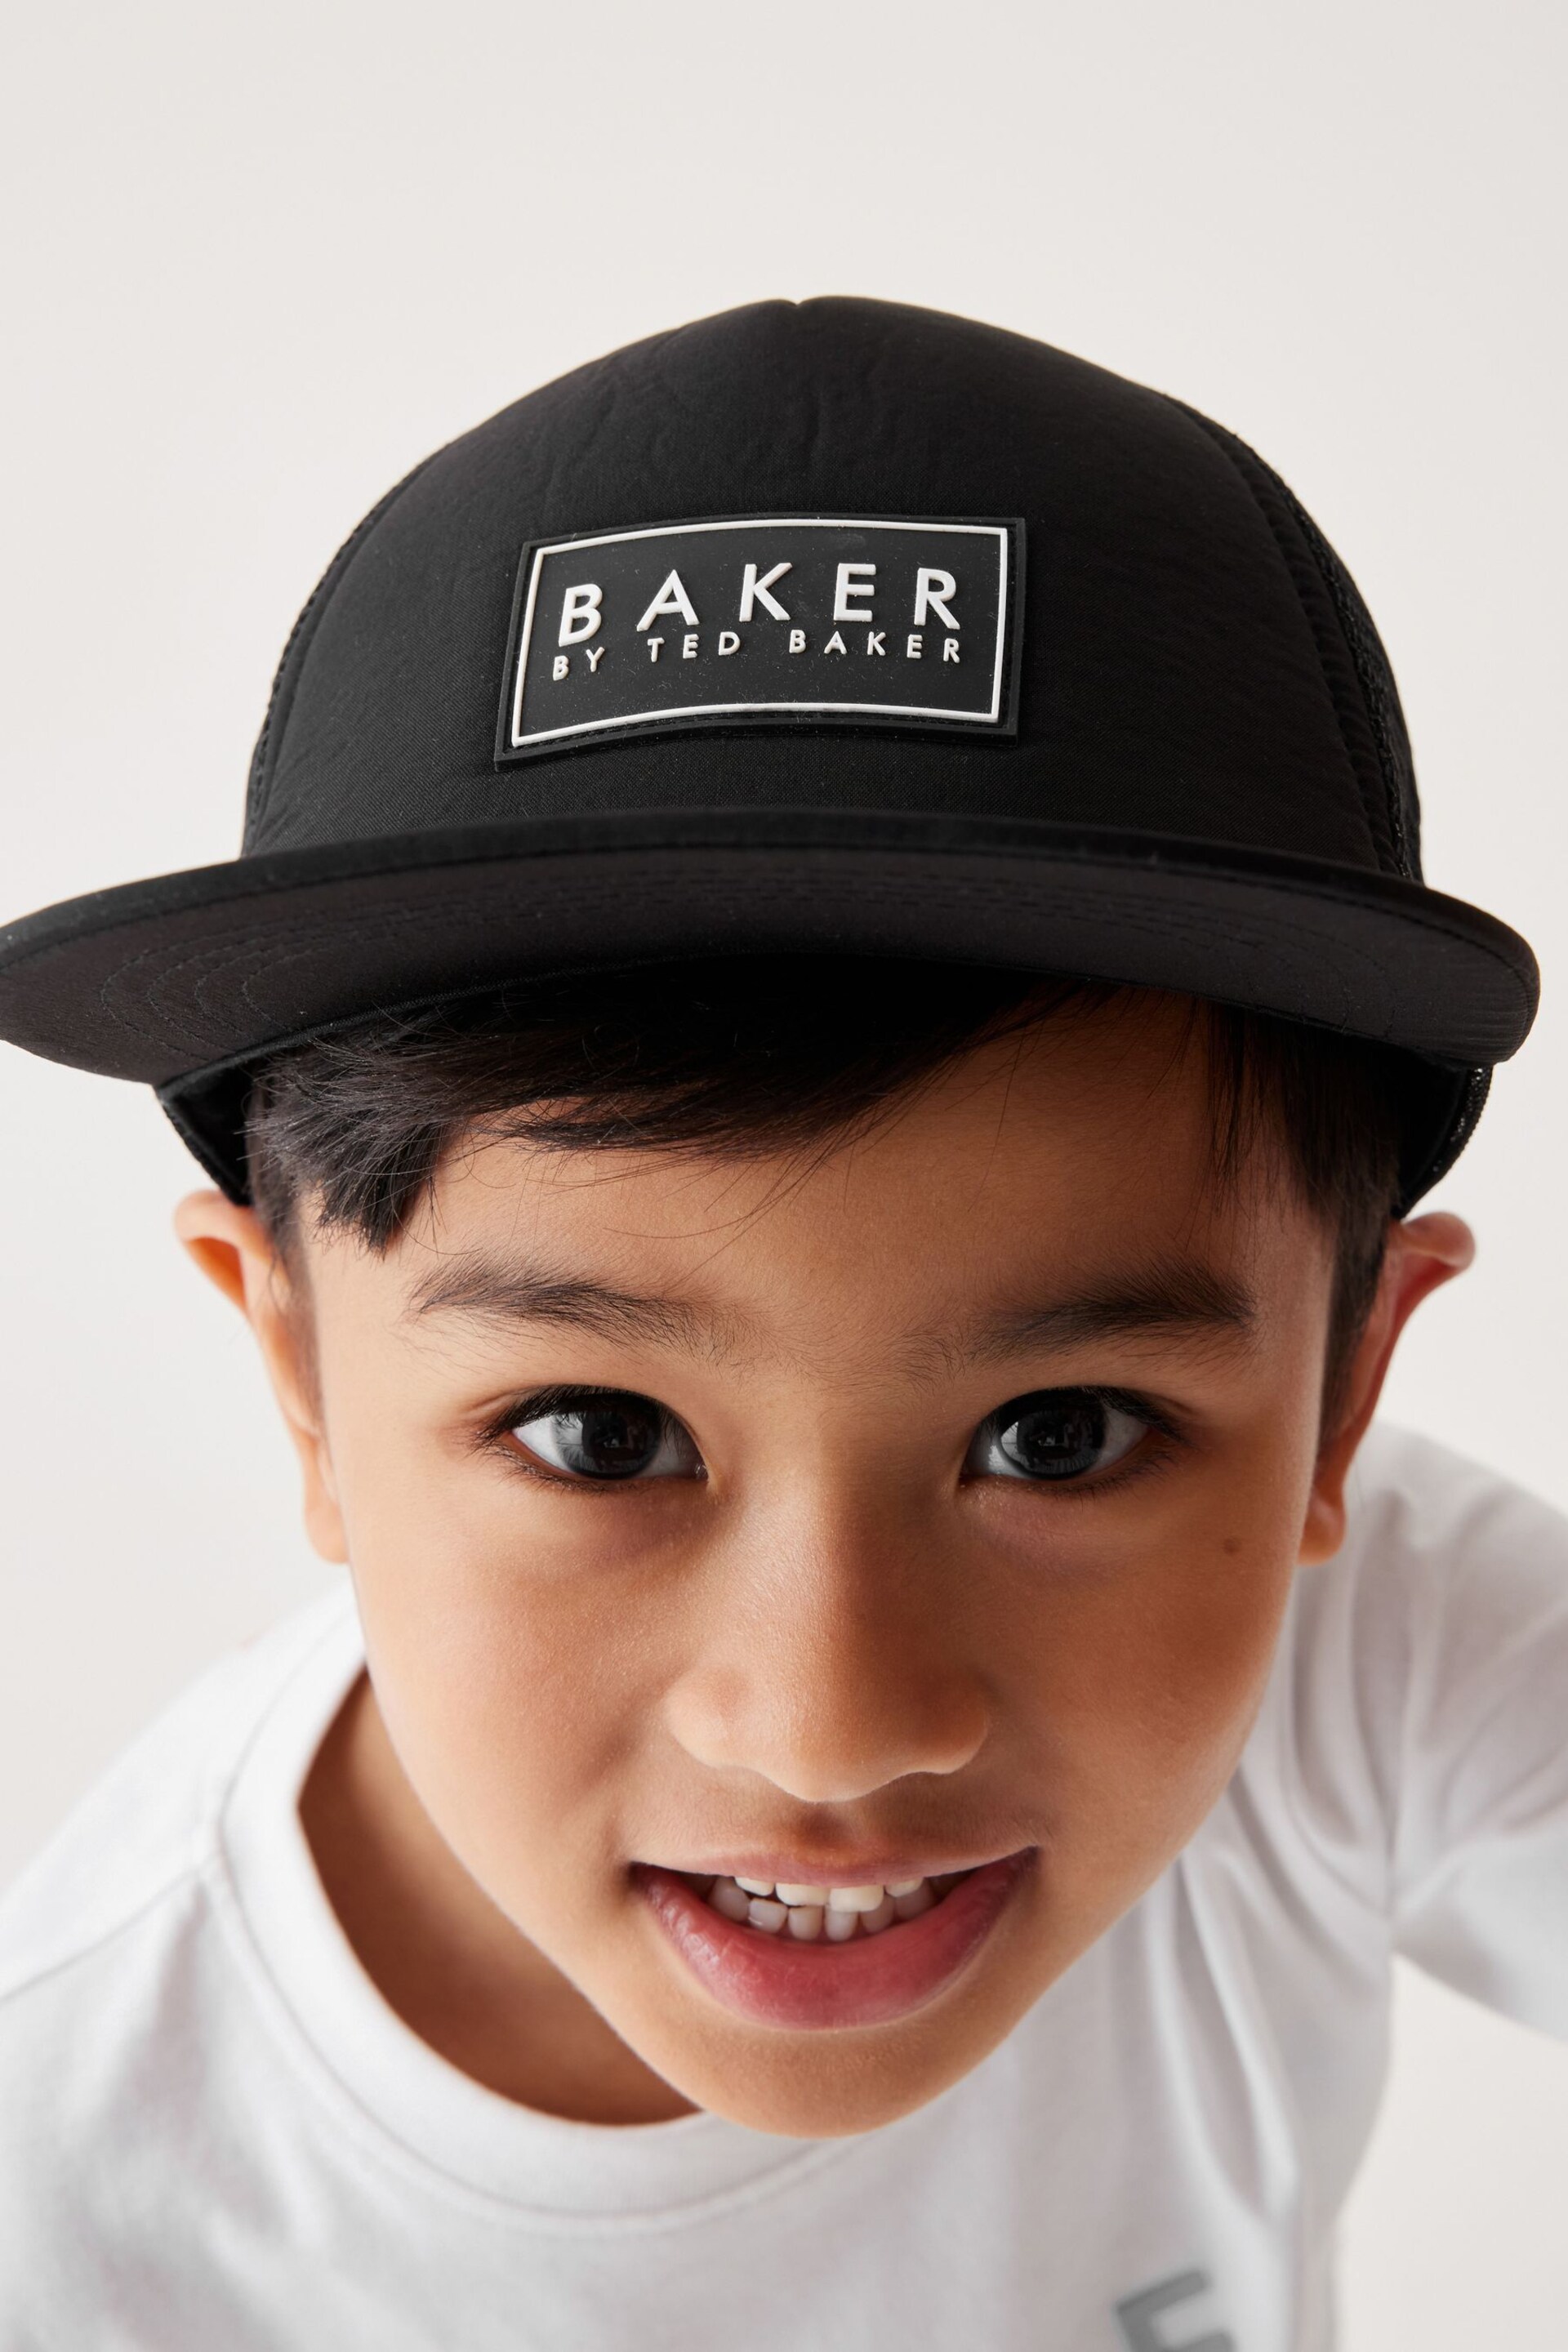 Baker by Ted Baker Boys Trapper Black Hat - Image 3 of 6